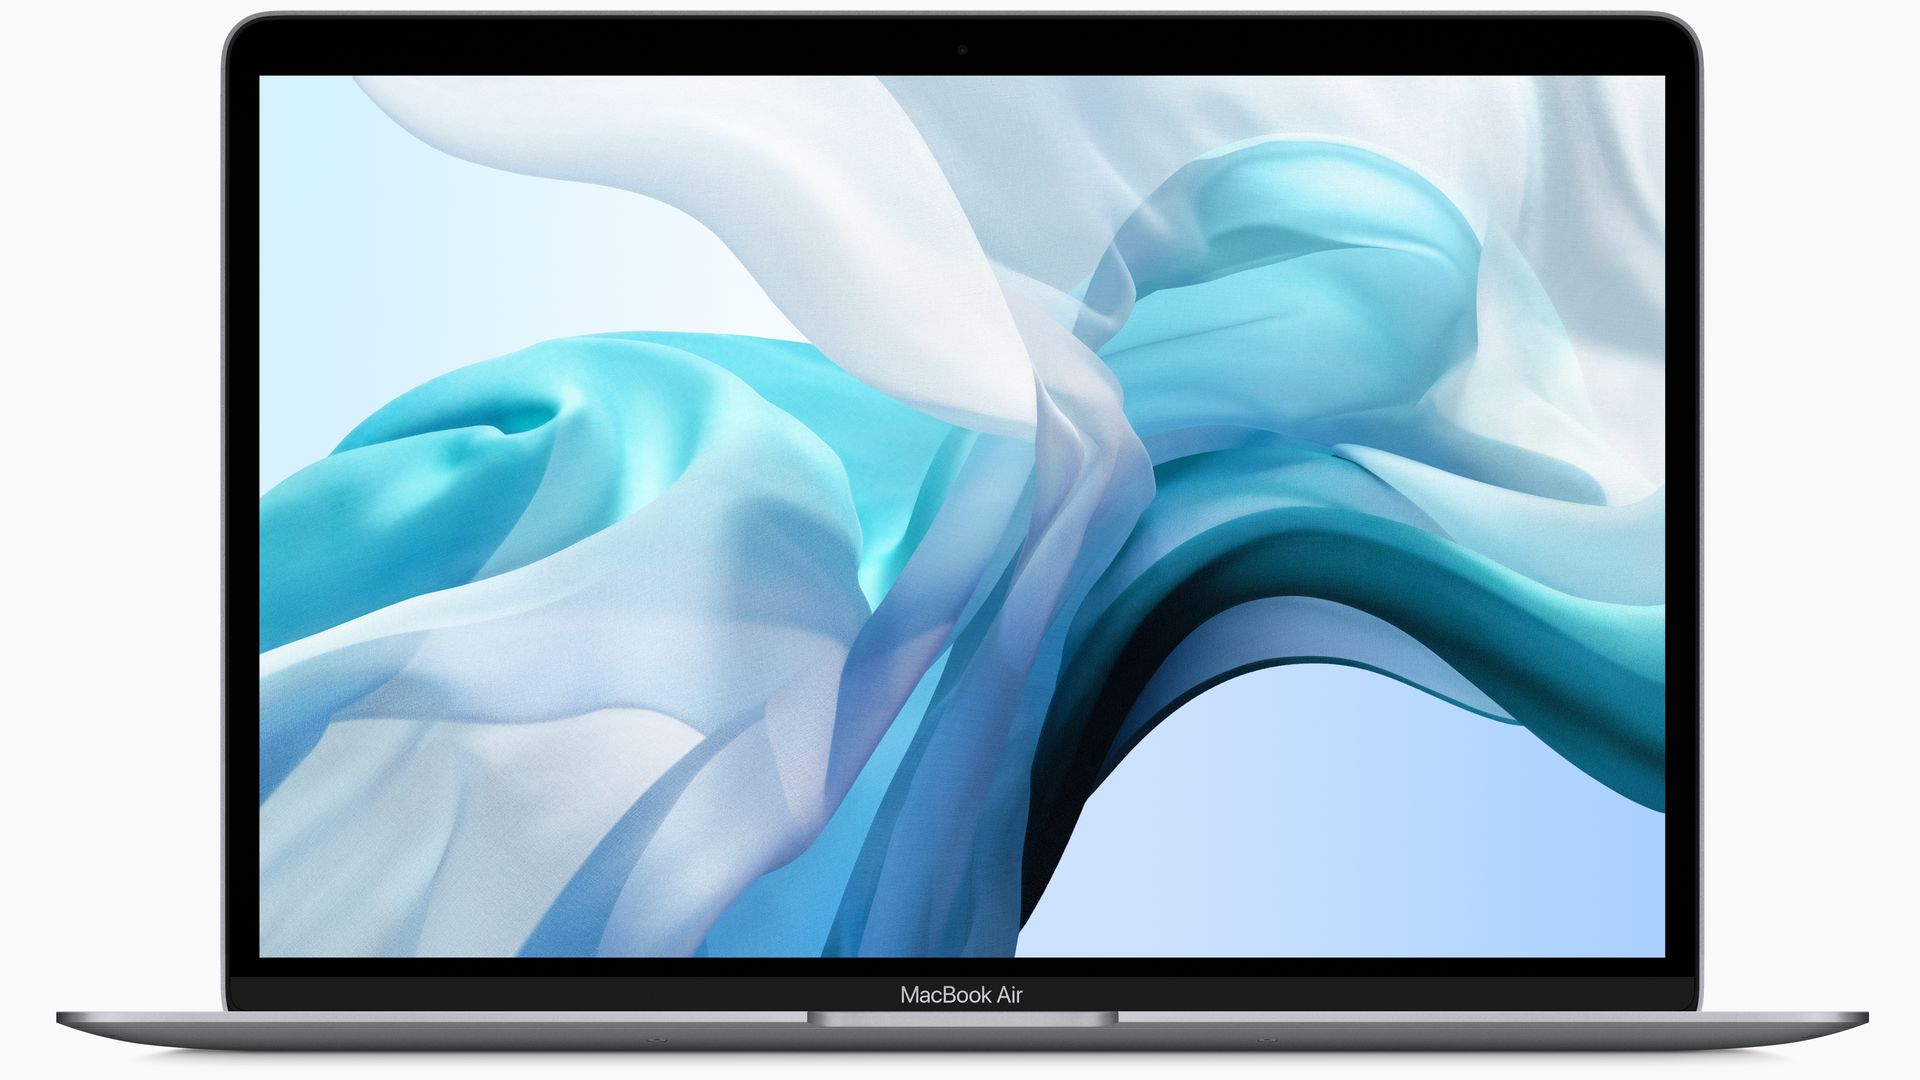 The updated MacBook Air